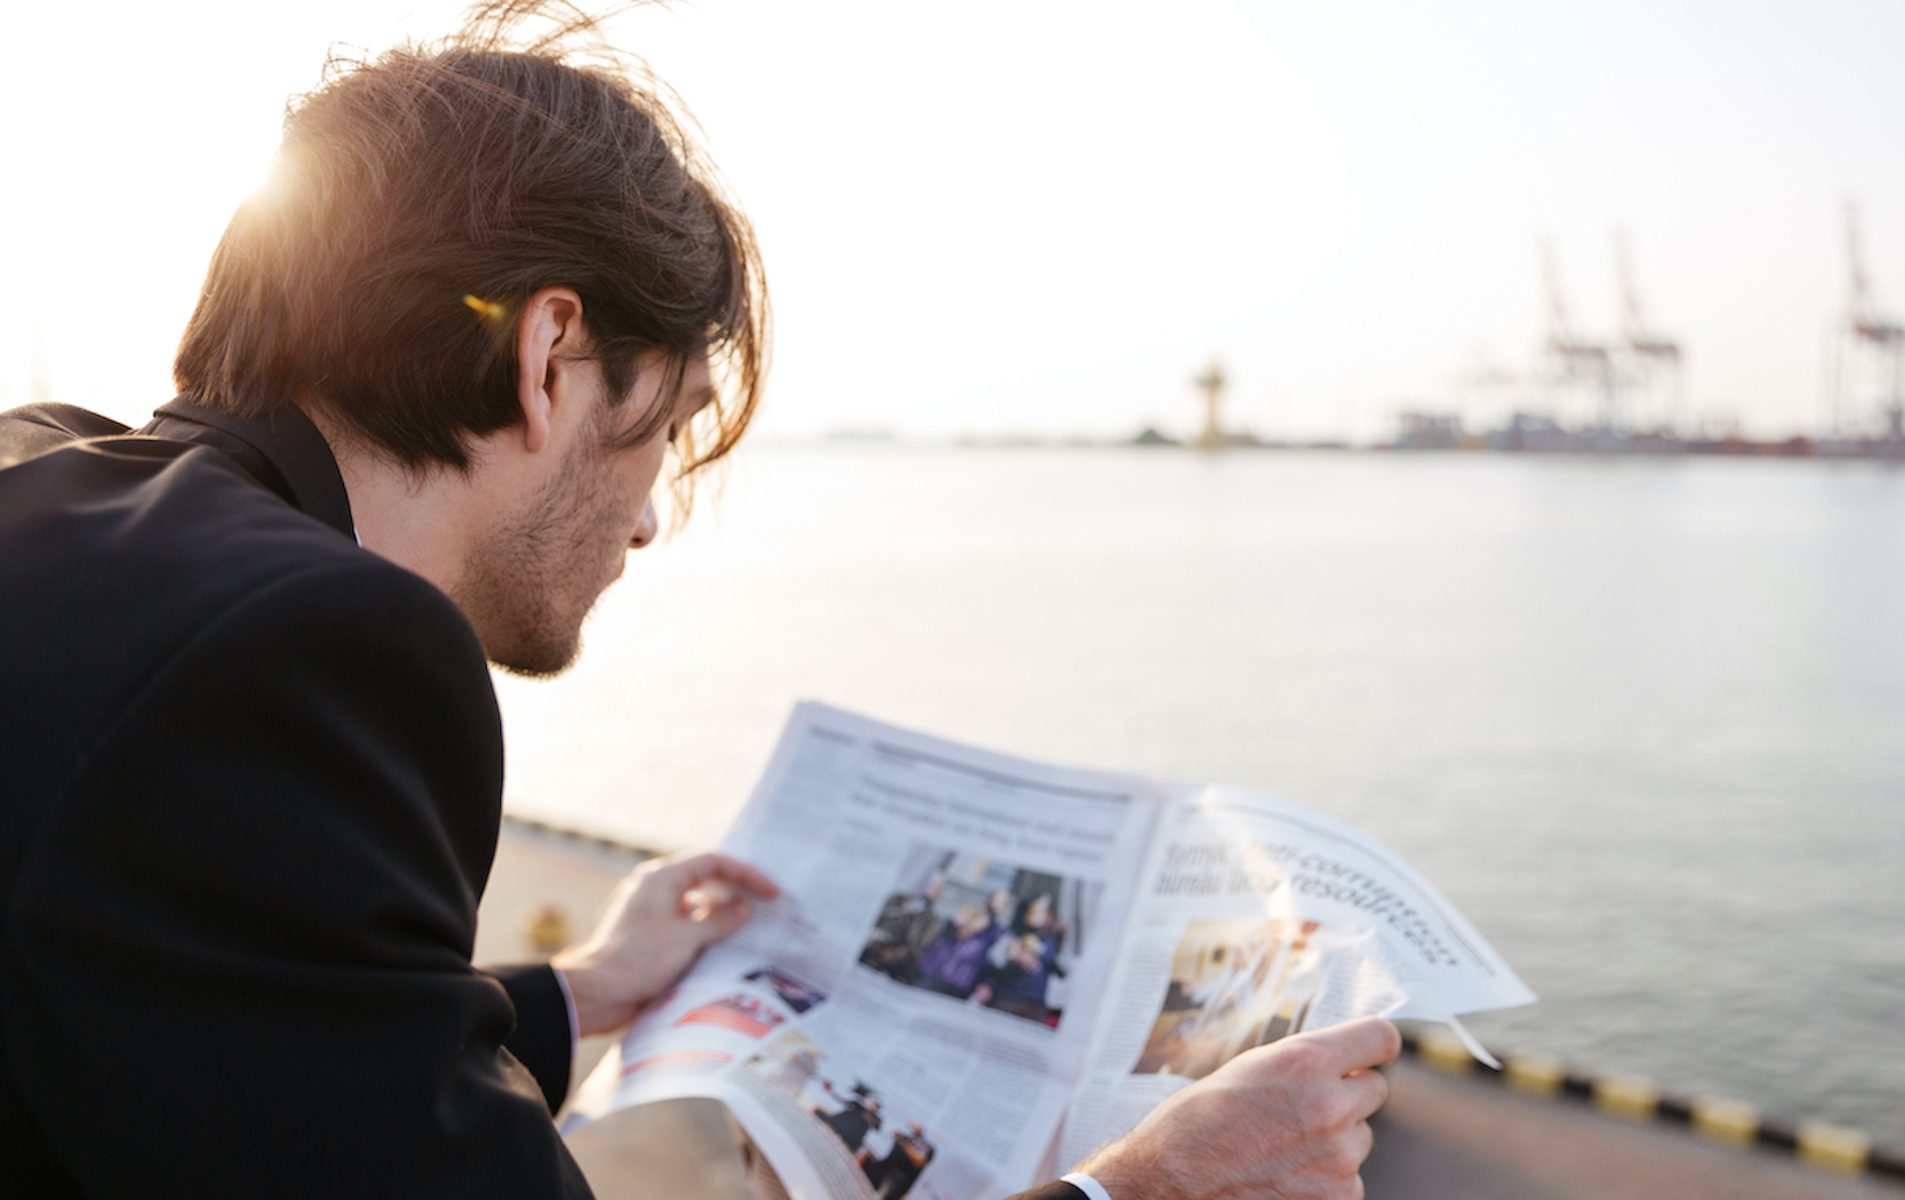 Successful businessman reading newspaper